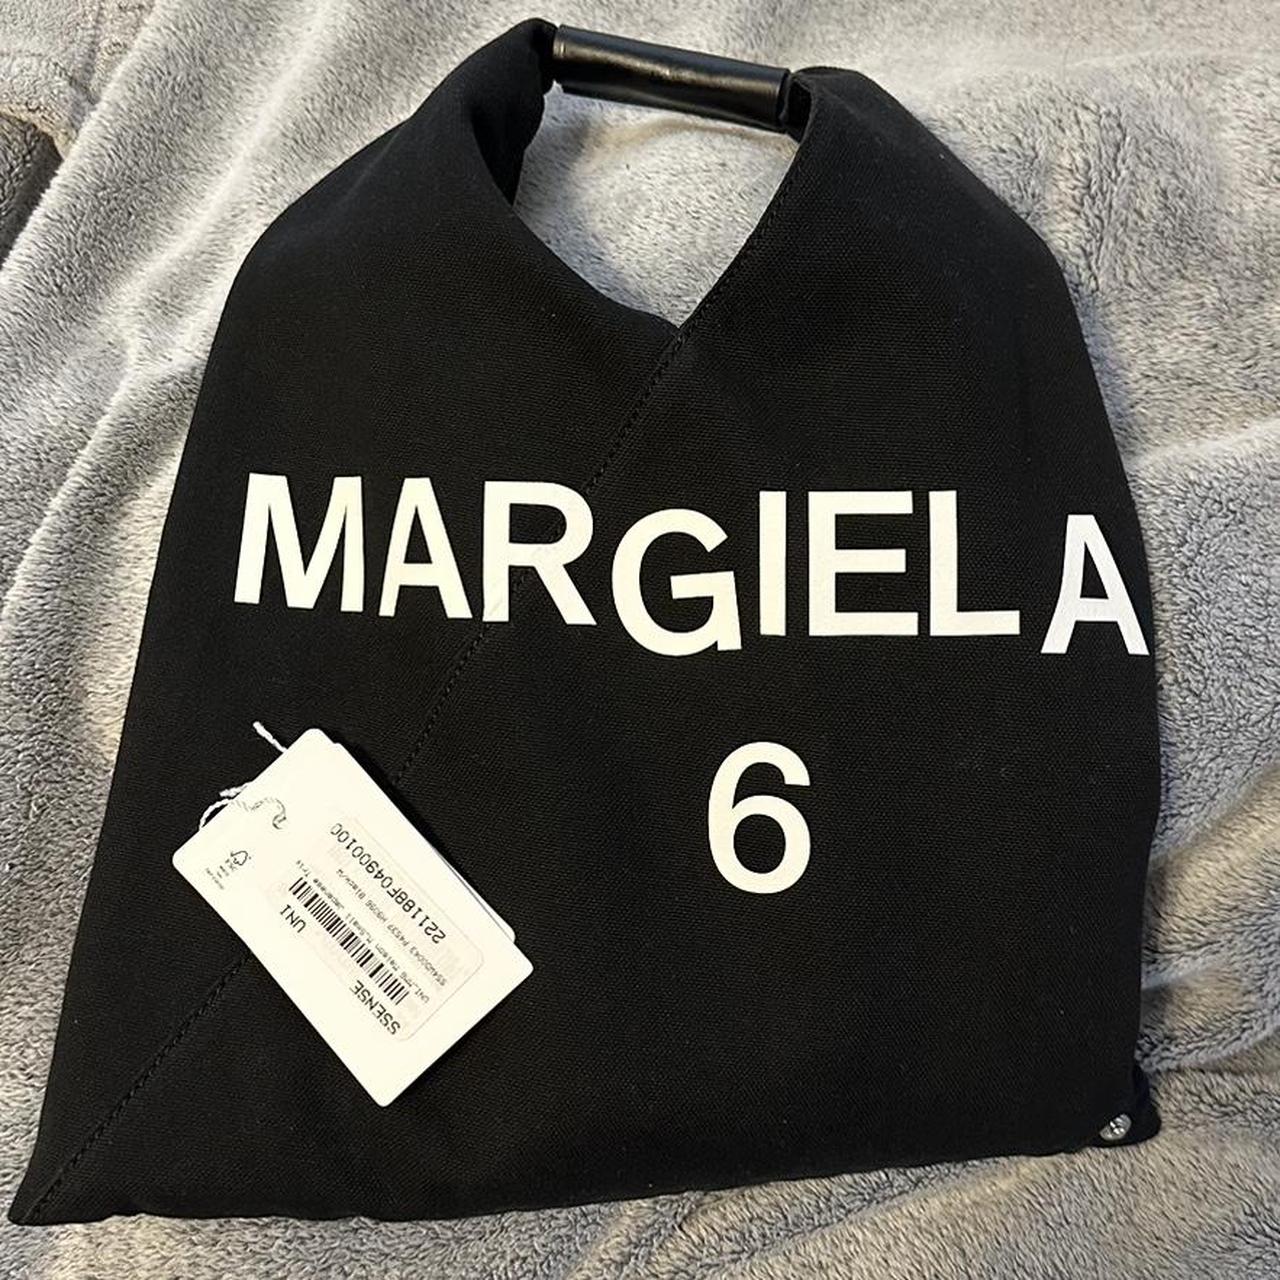 MM6 Maison Margiela Women's Black and White Bag